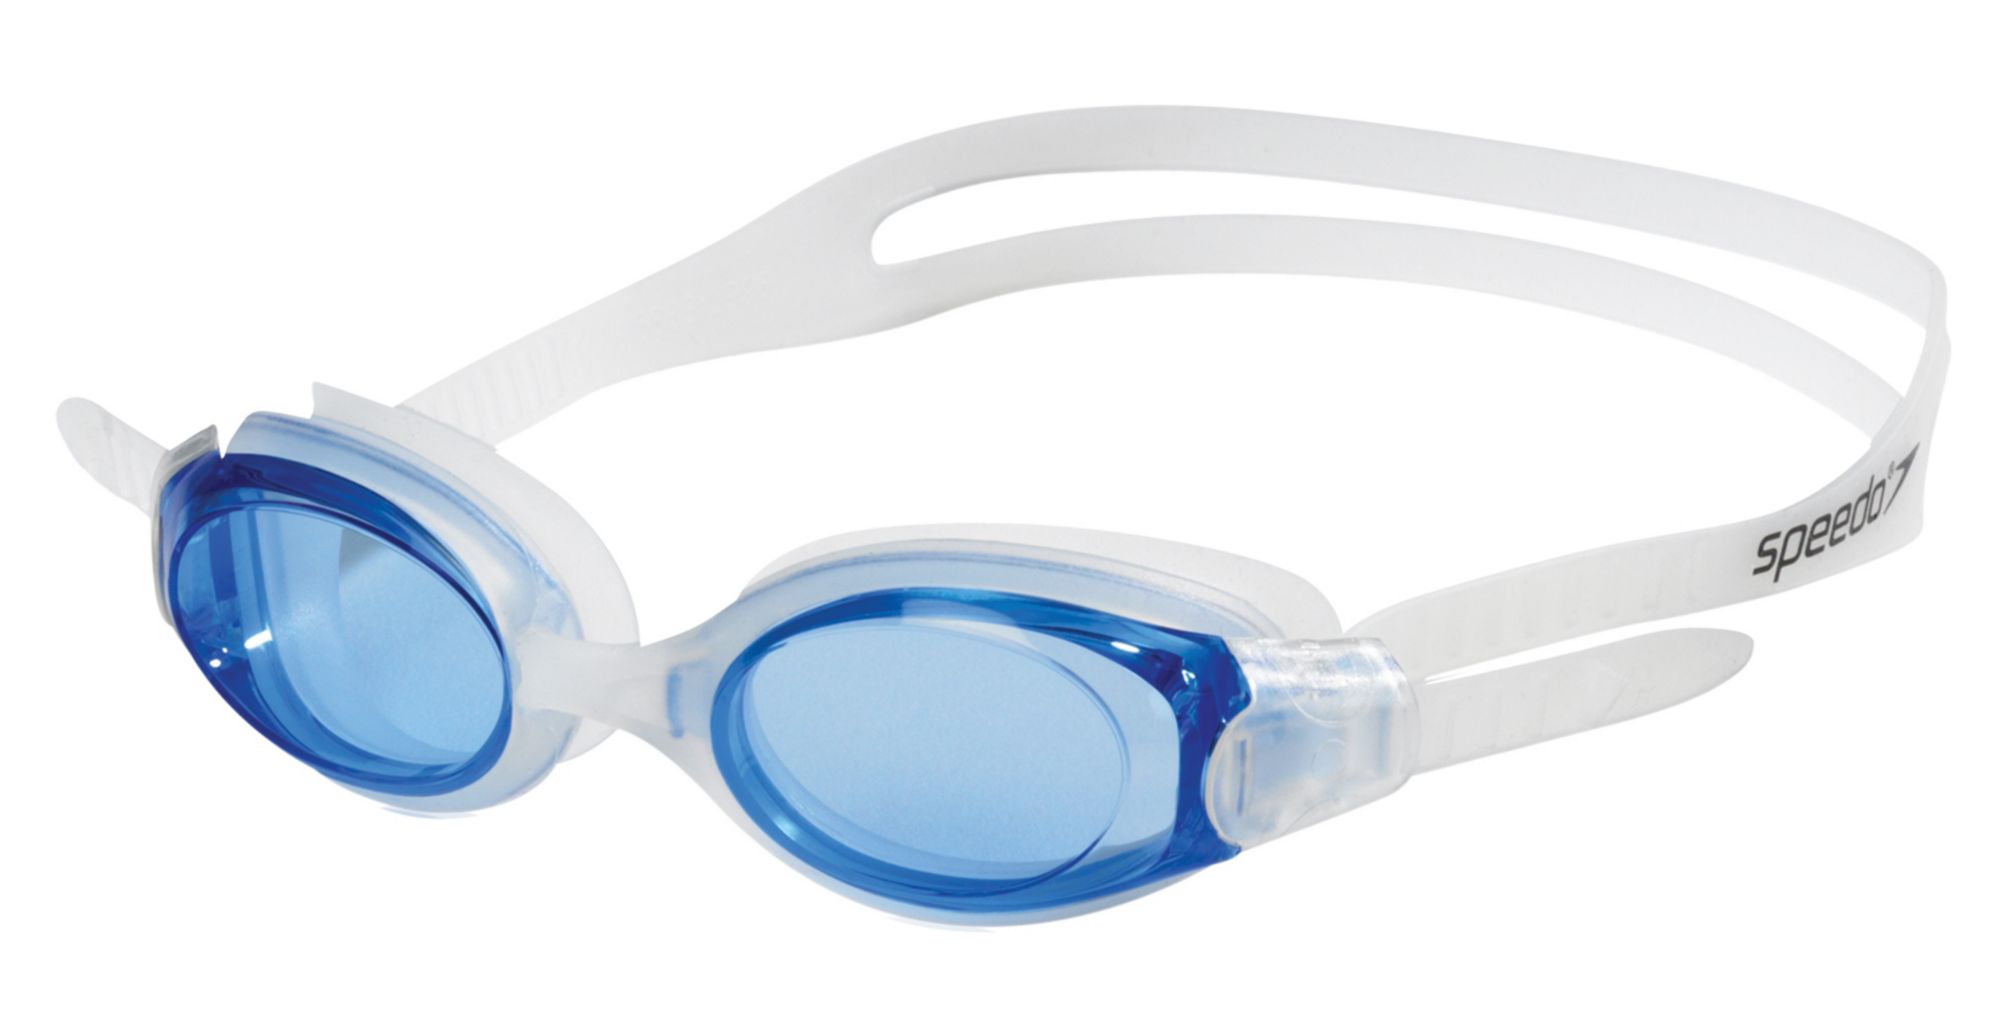 speedo swimming goggles price